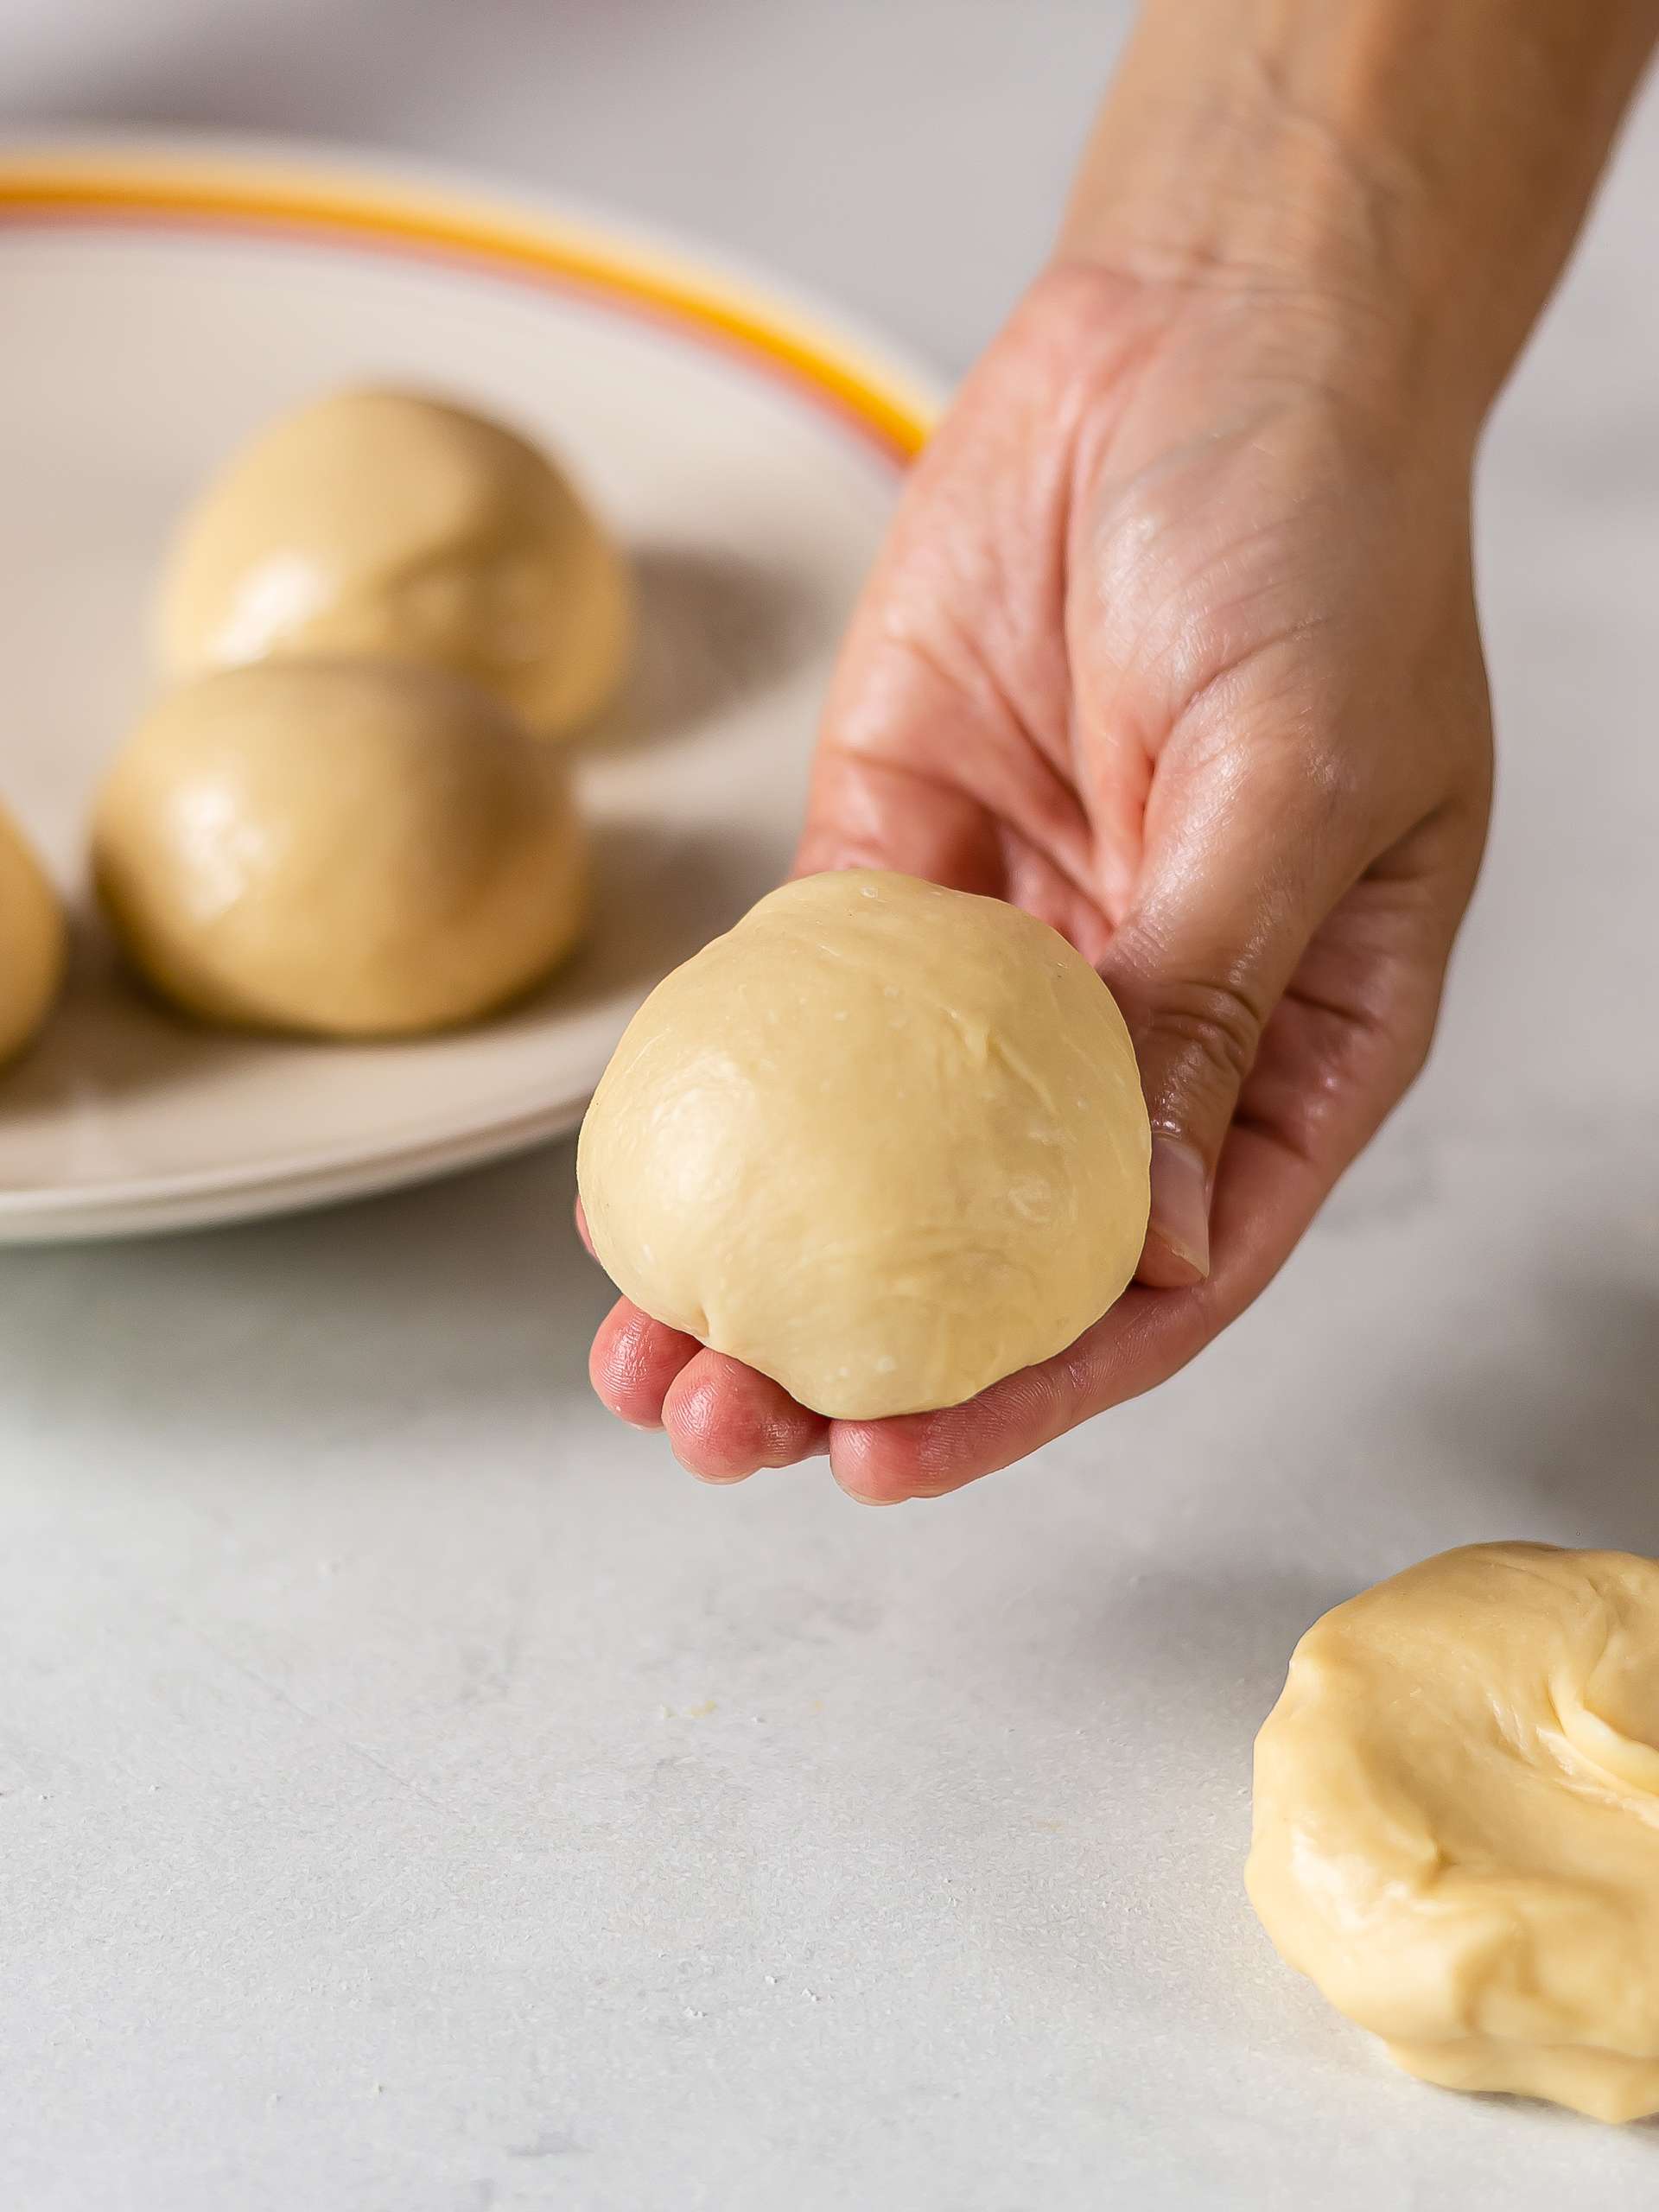 thai banana pancake dough divided into balls